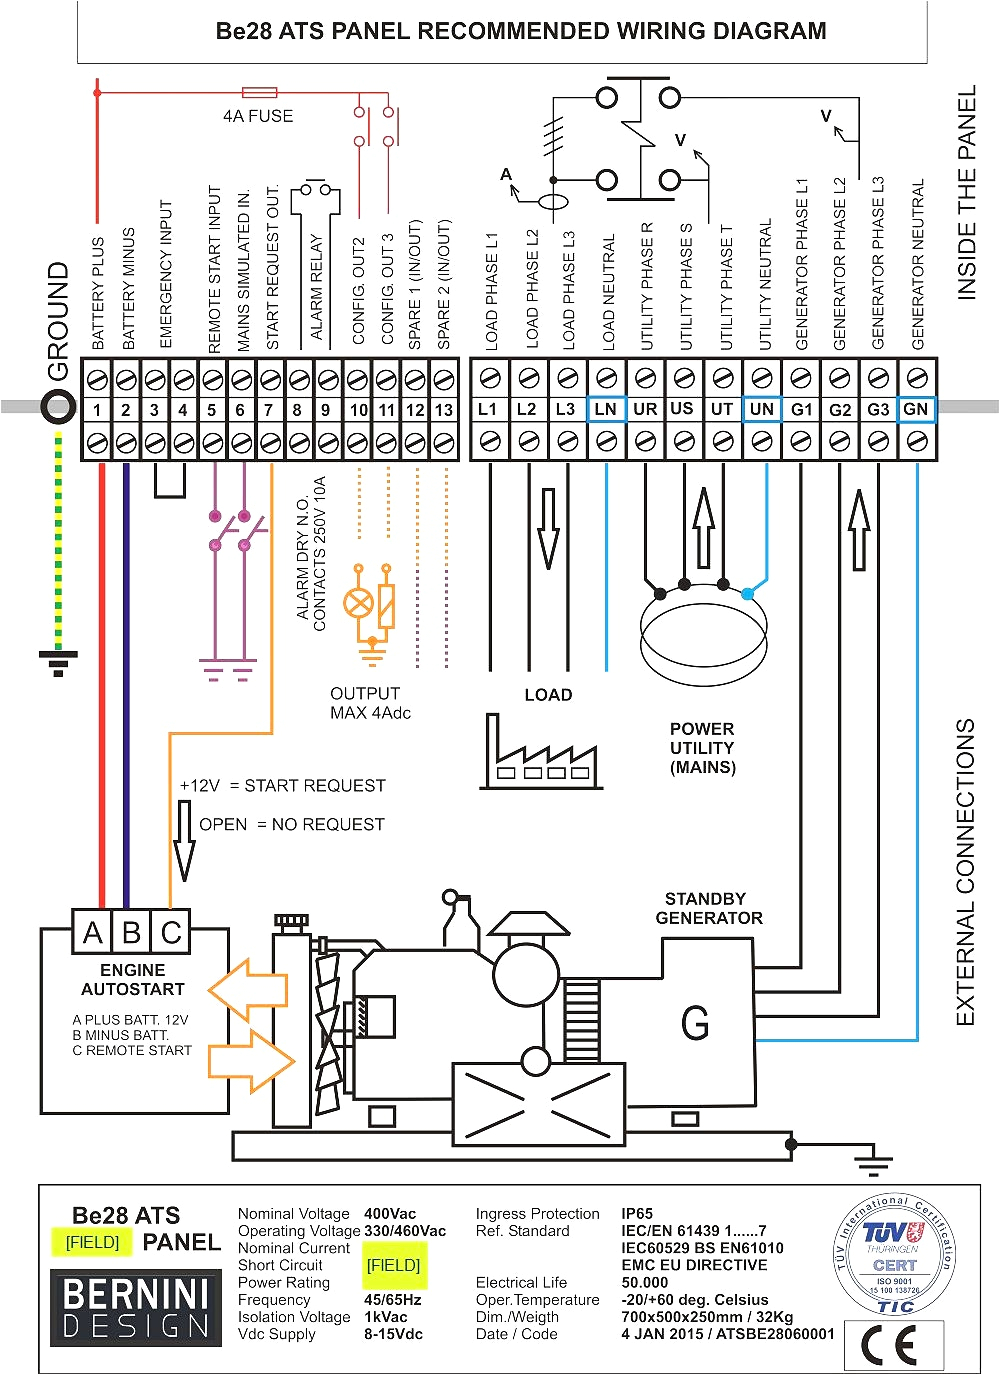 asco wiring diagrams wiring diagram mega asco wiring diagram motor control